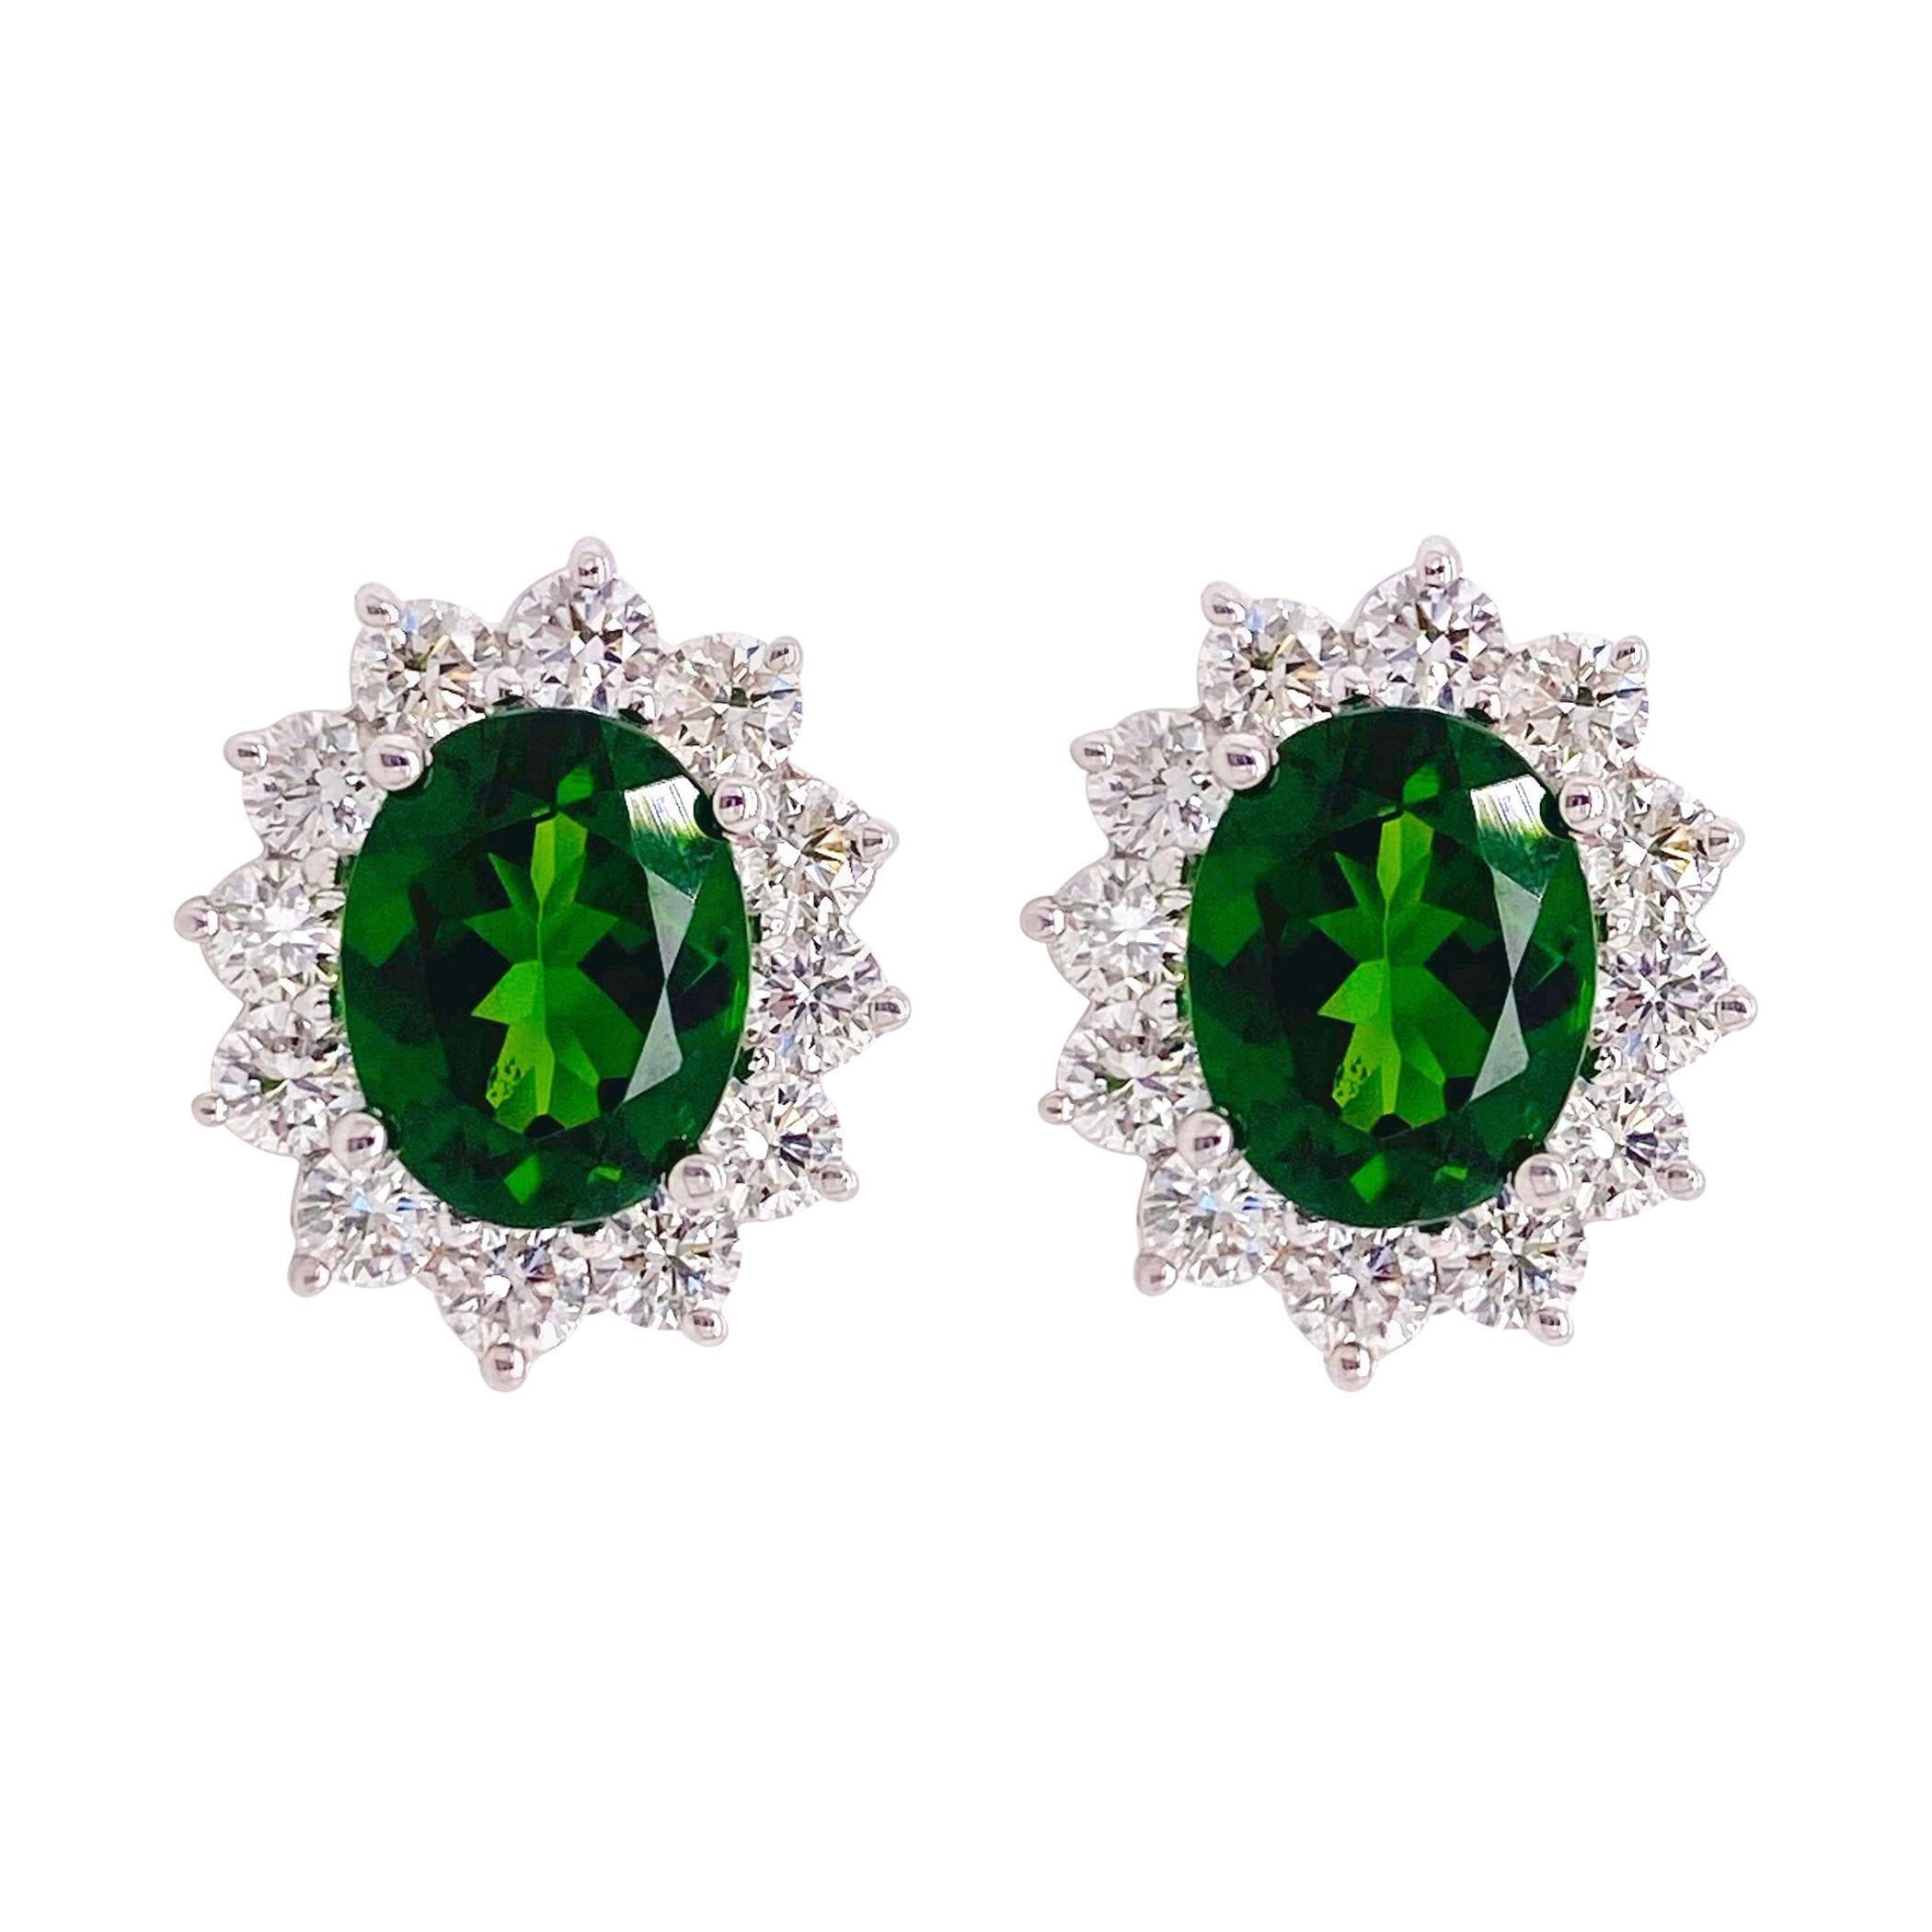 Russalite Diamond Halo Earring Studs, 5.80 carats Green Russalite and Diamonds